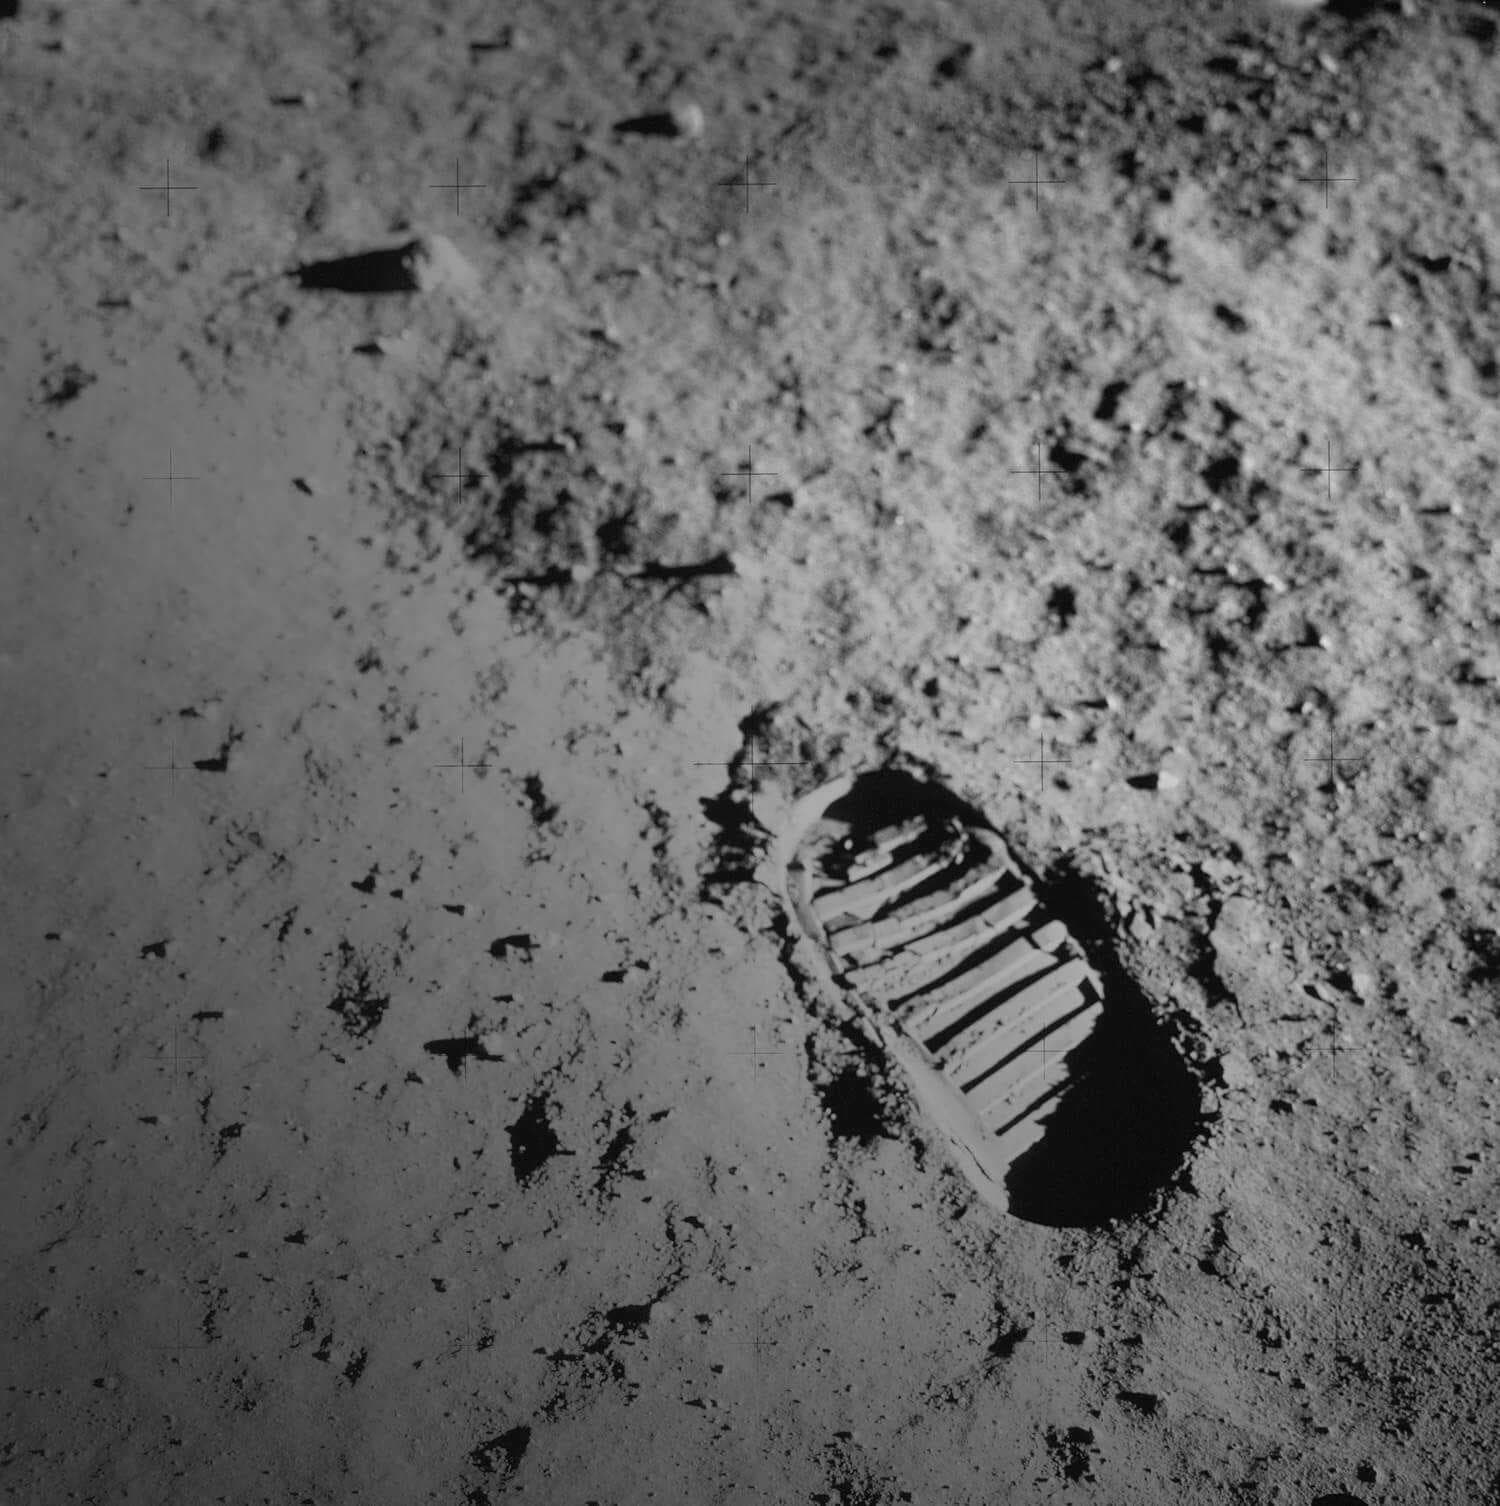 Footprint on the moon's surface